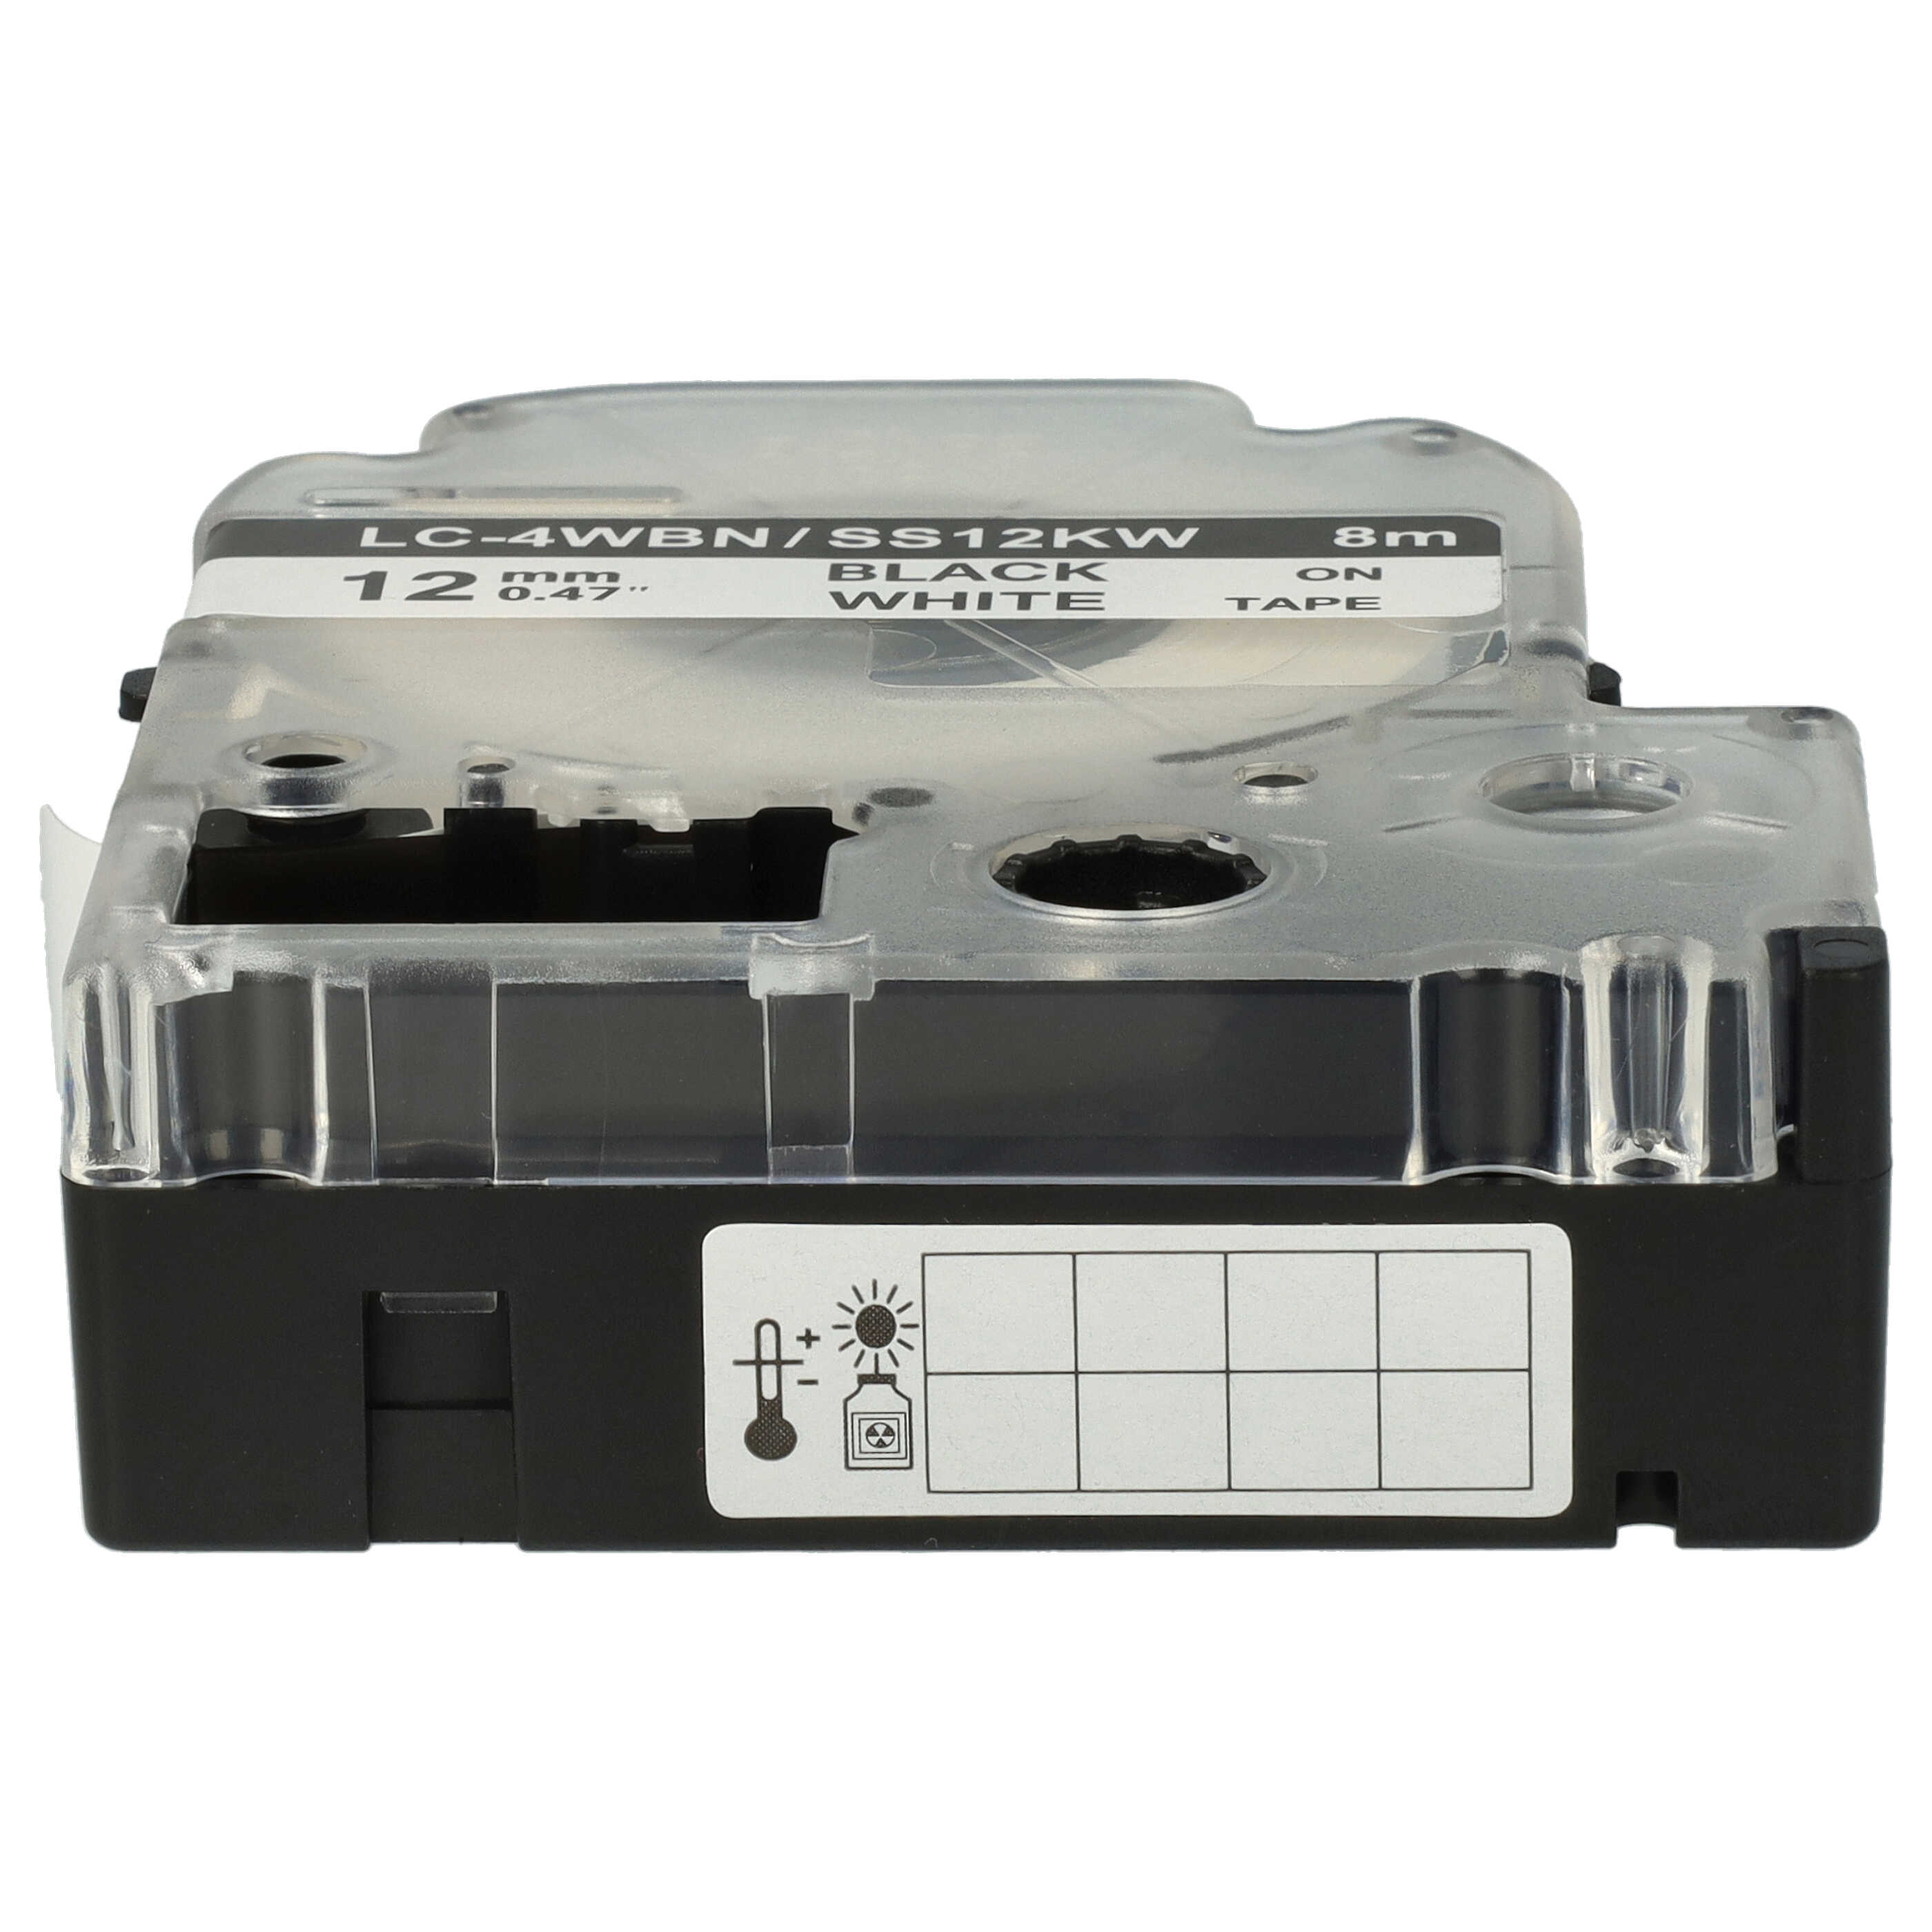 10x Casete cinta escritura reemplaza Epson SS12KW, LC-4WBN Negro su Blanco